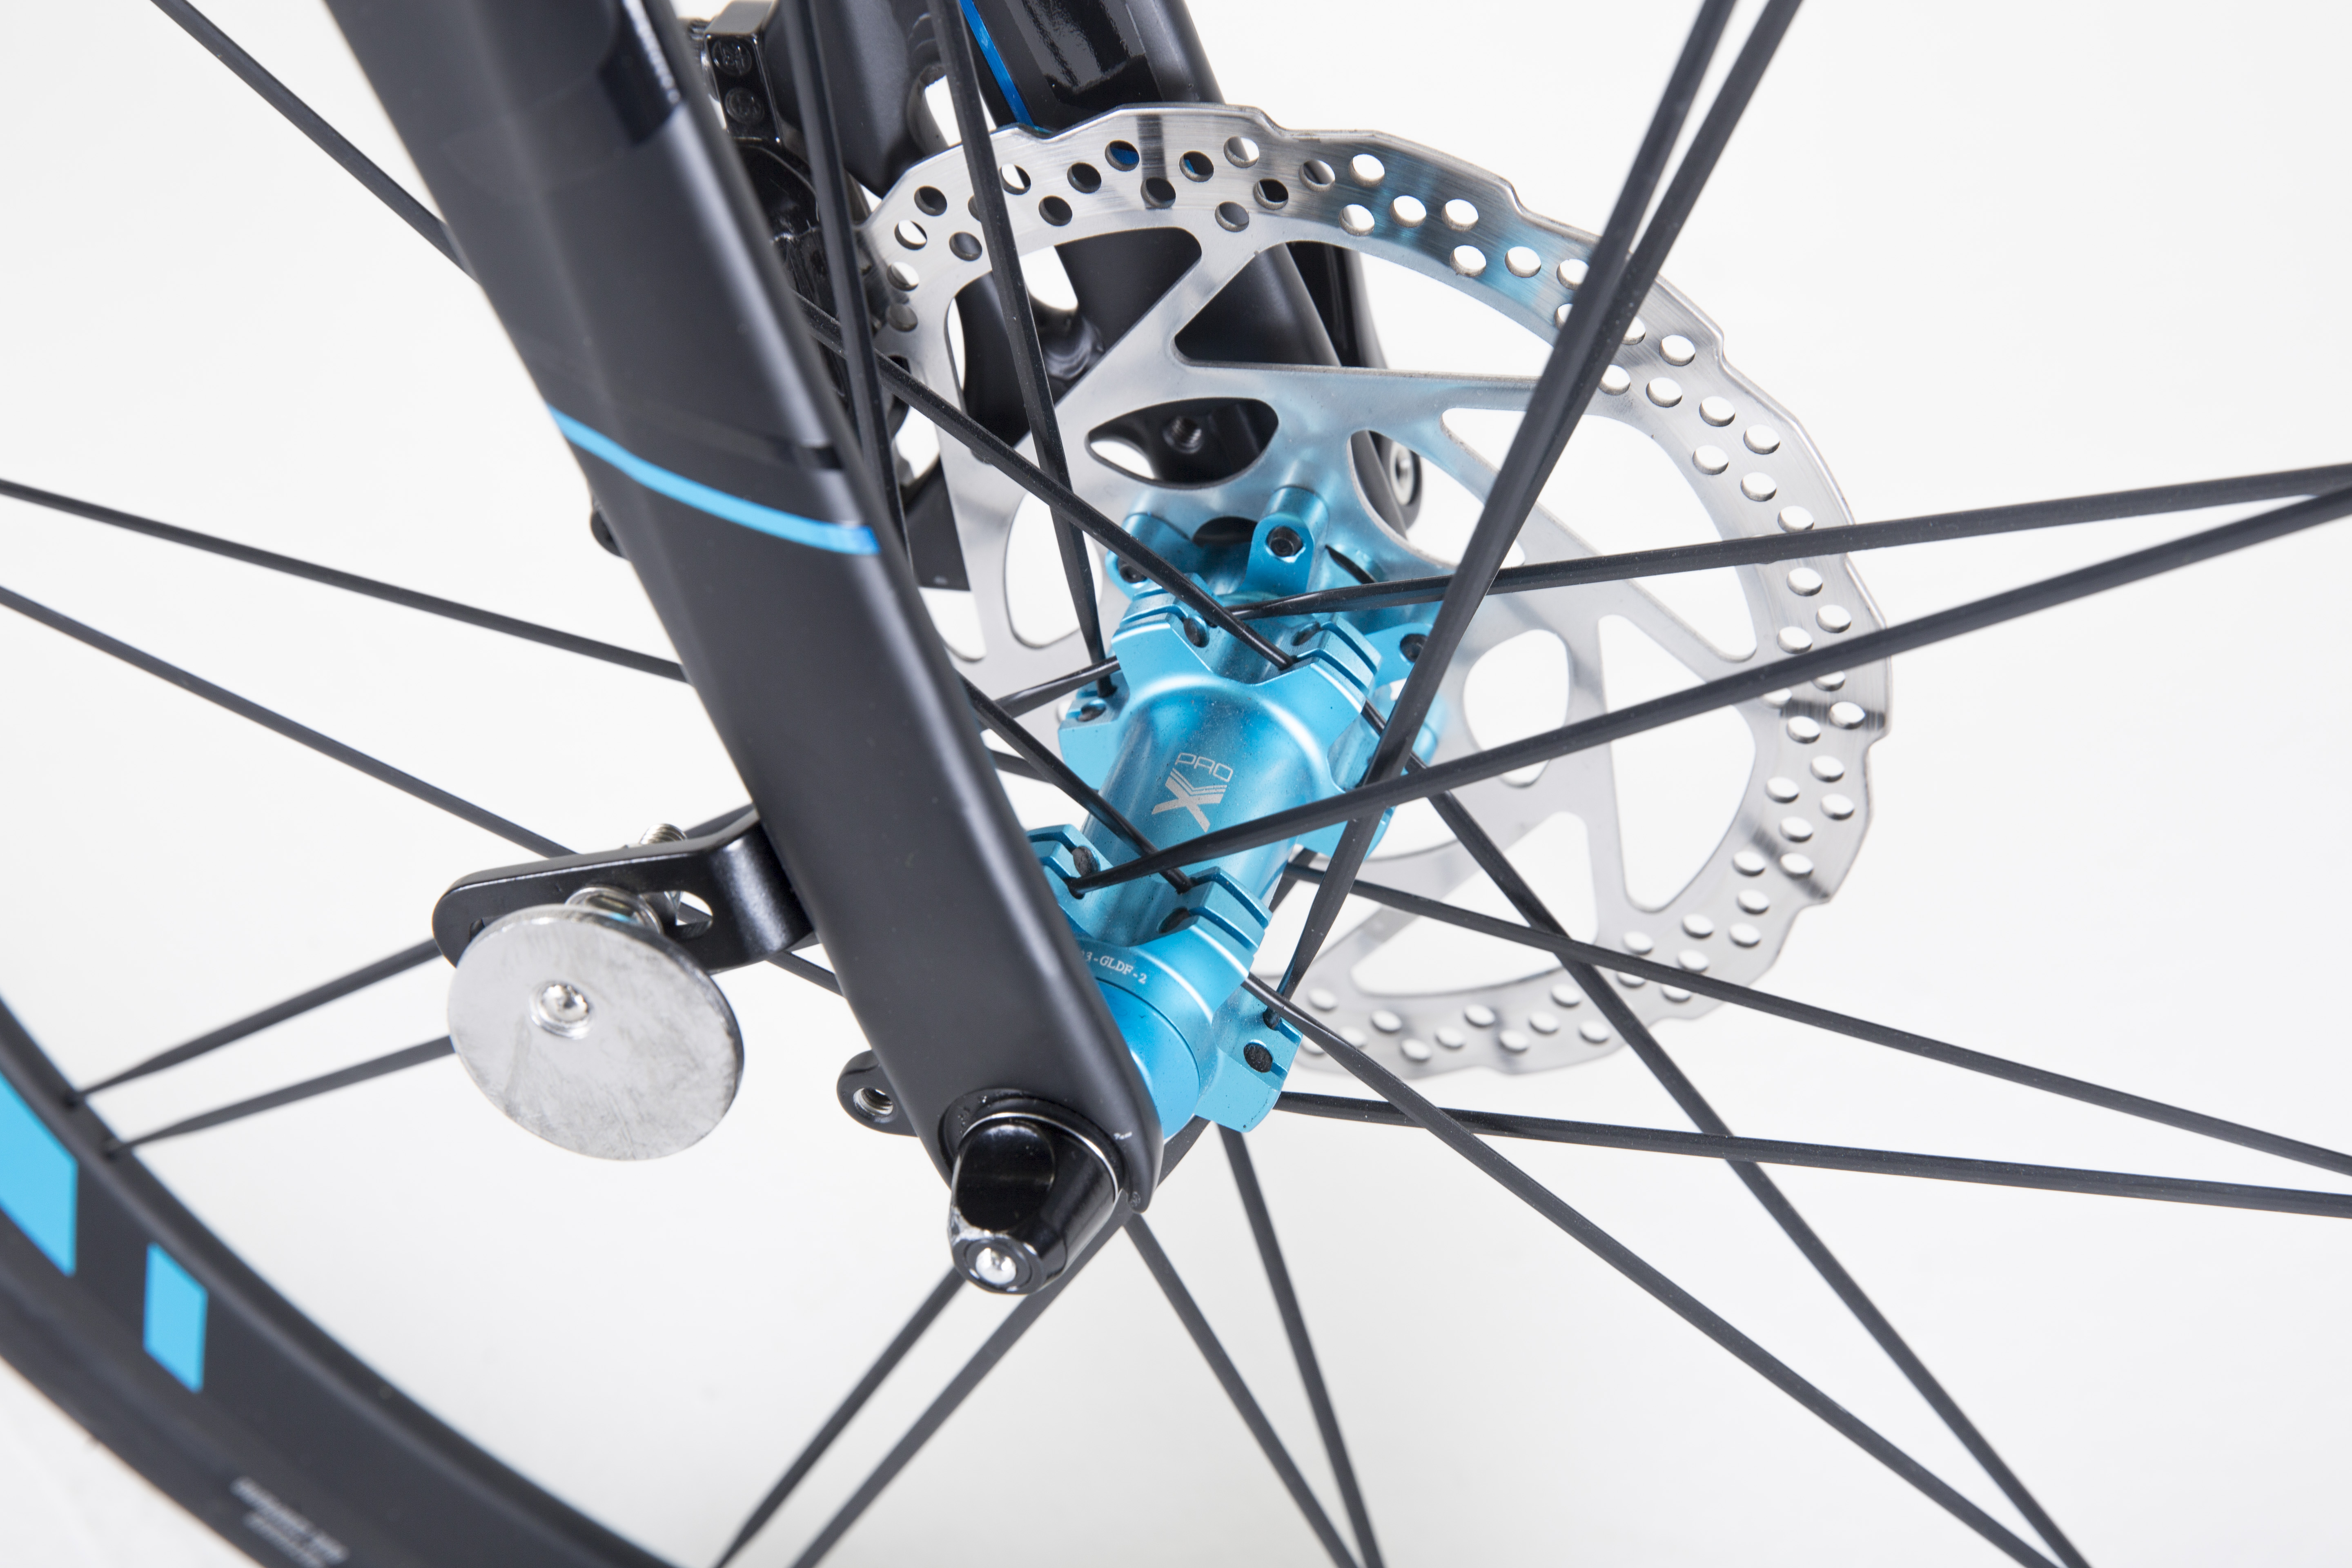 Tern Verge X11 uses hydraulic discs and premium wheels